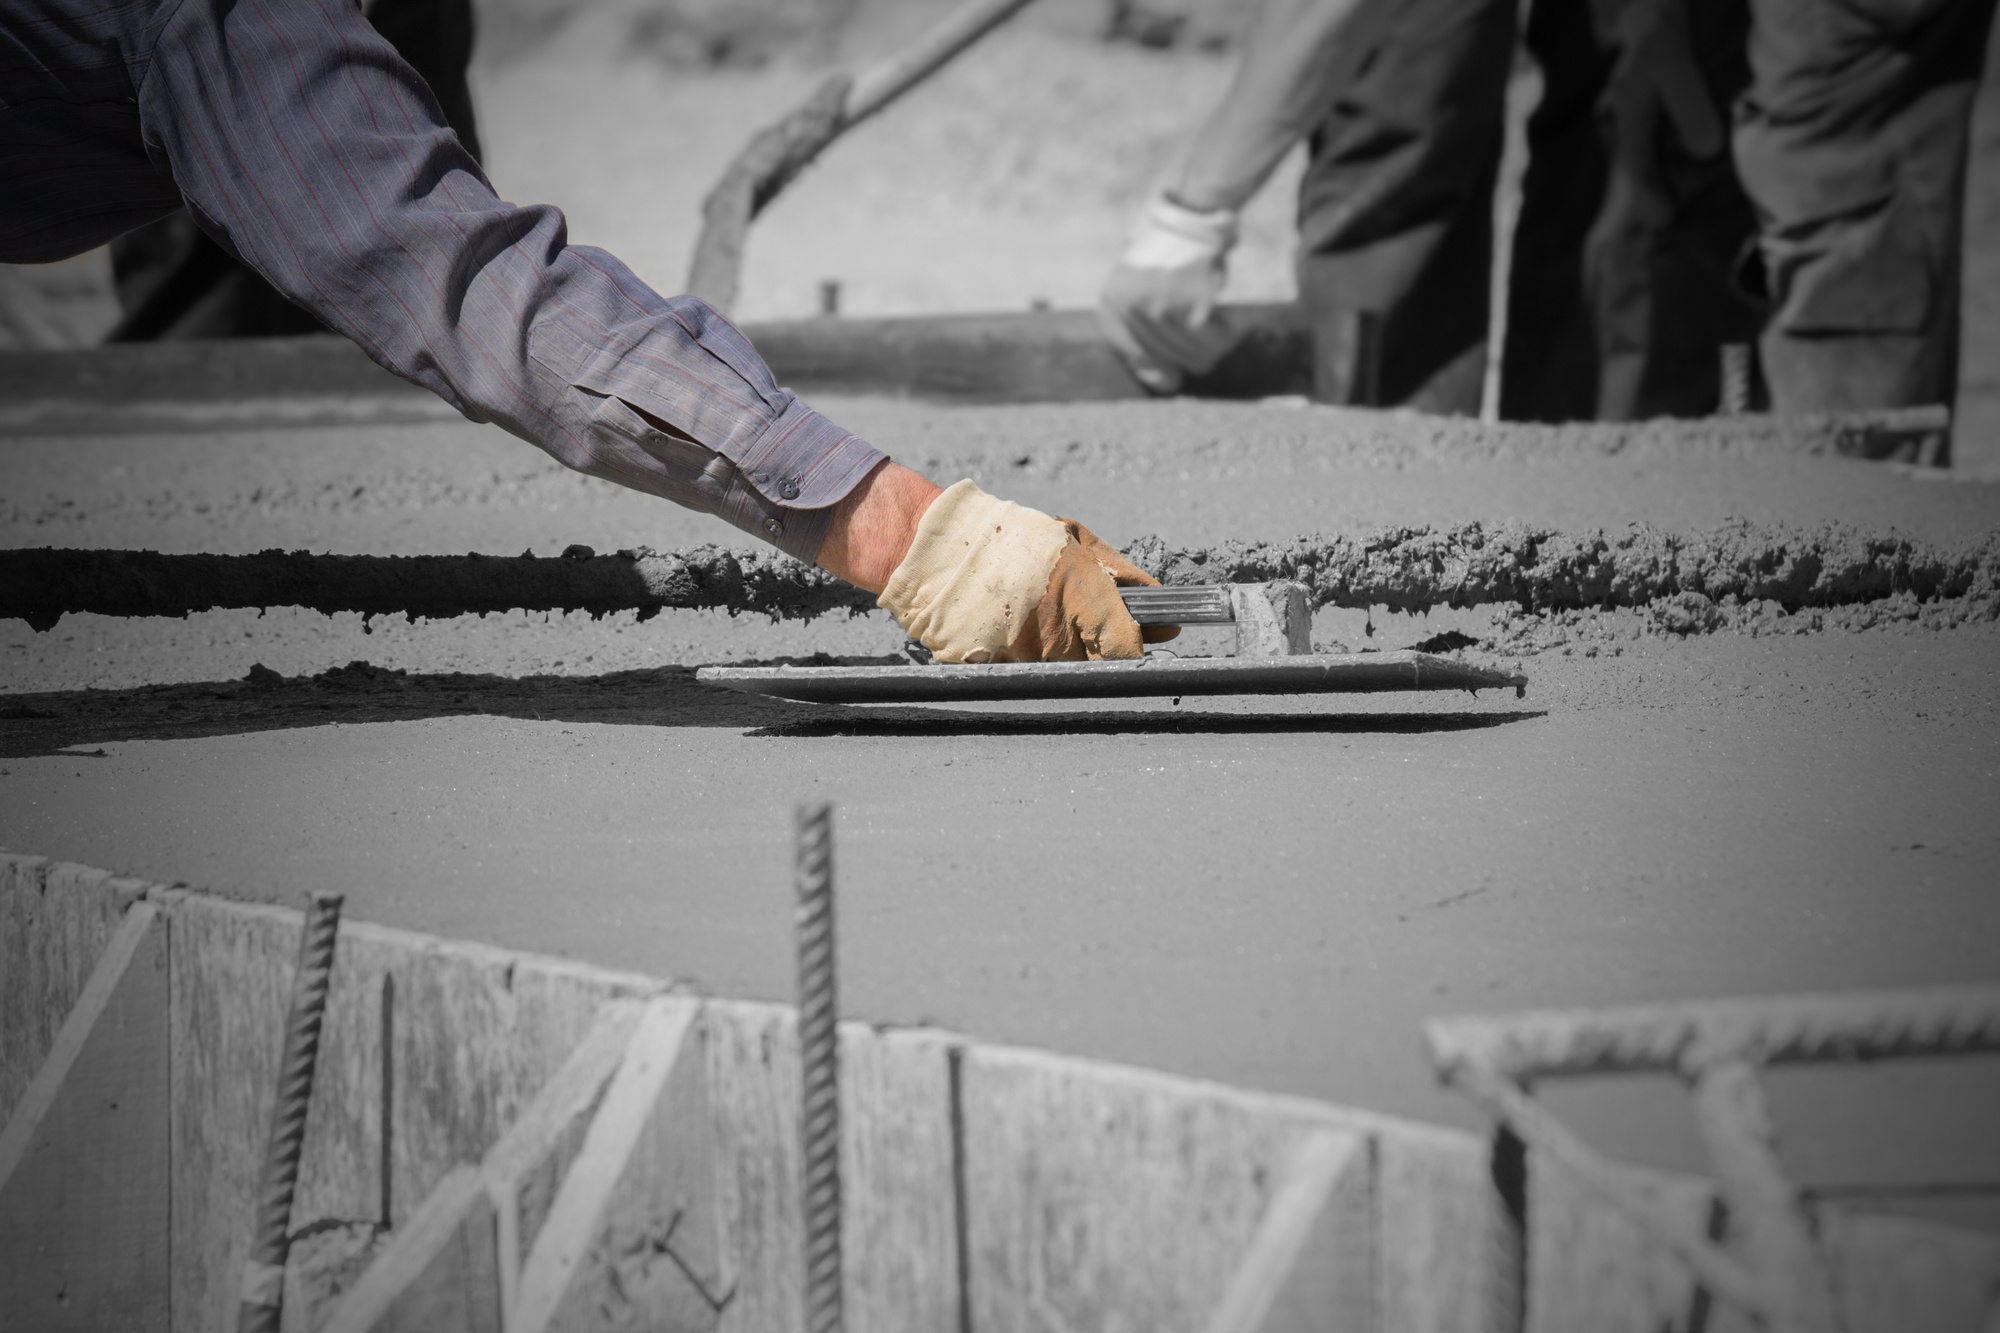 Construction workers leveling concrete pavement